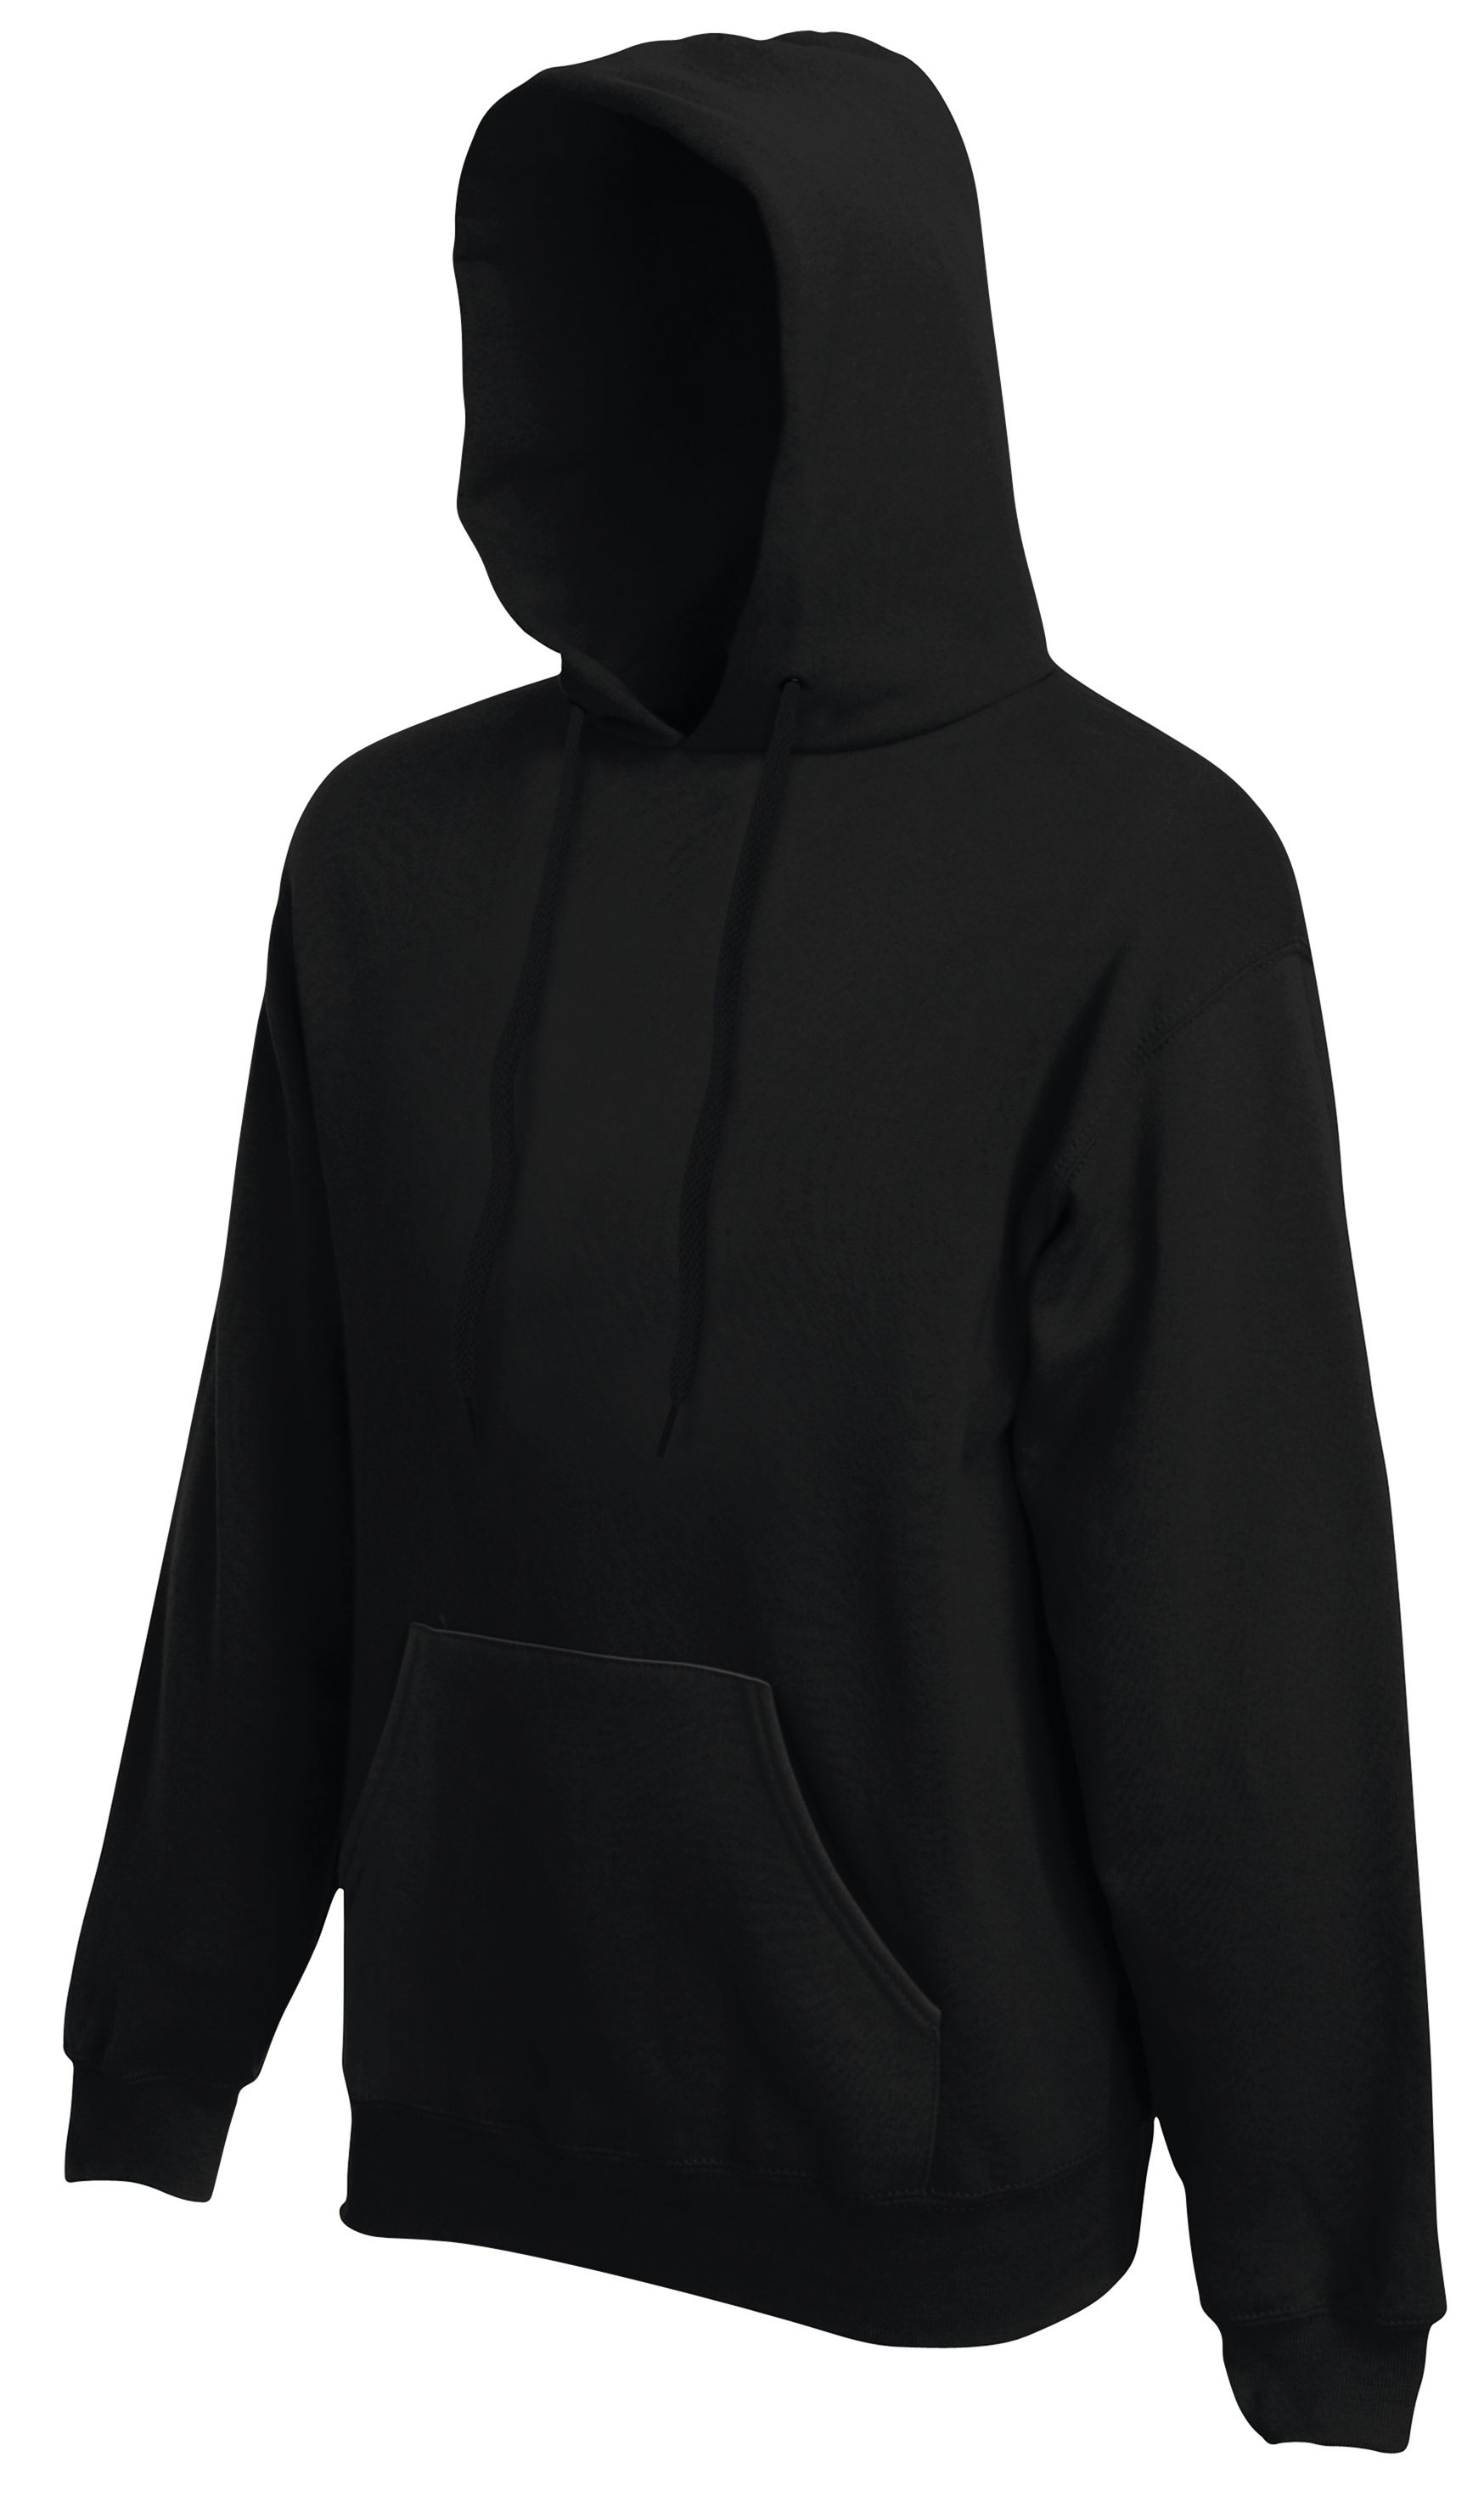 ax-httpswebsystems.s3.amazonaws.comtmp_for_downloadfruit-of-the-loom-premium-70-30-hooded-sweatshirt-black.jpeg